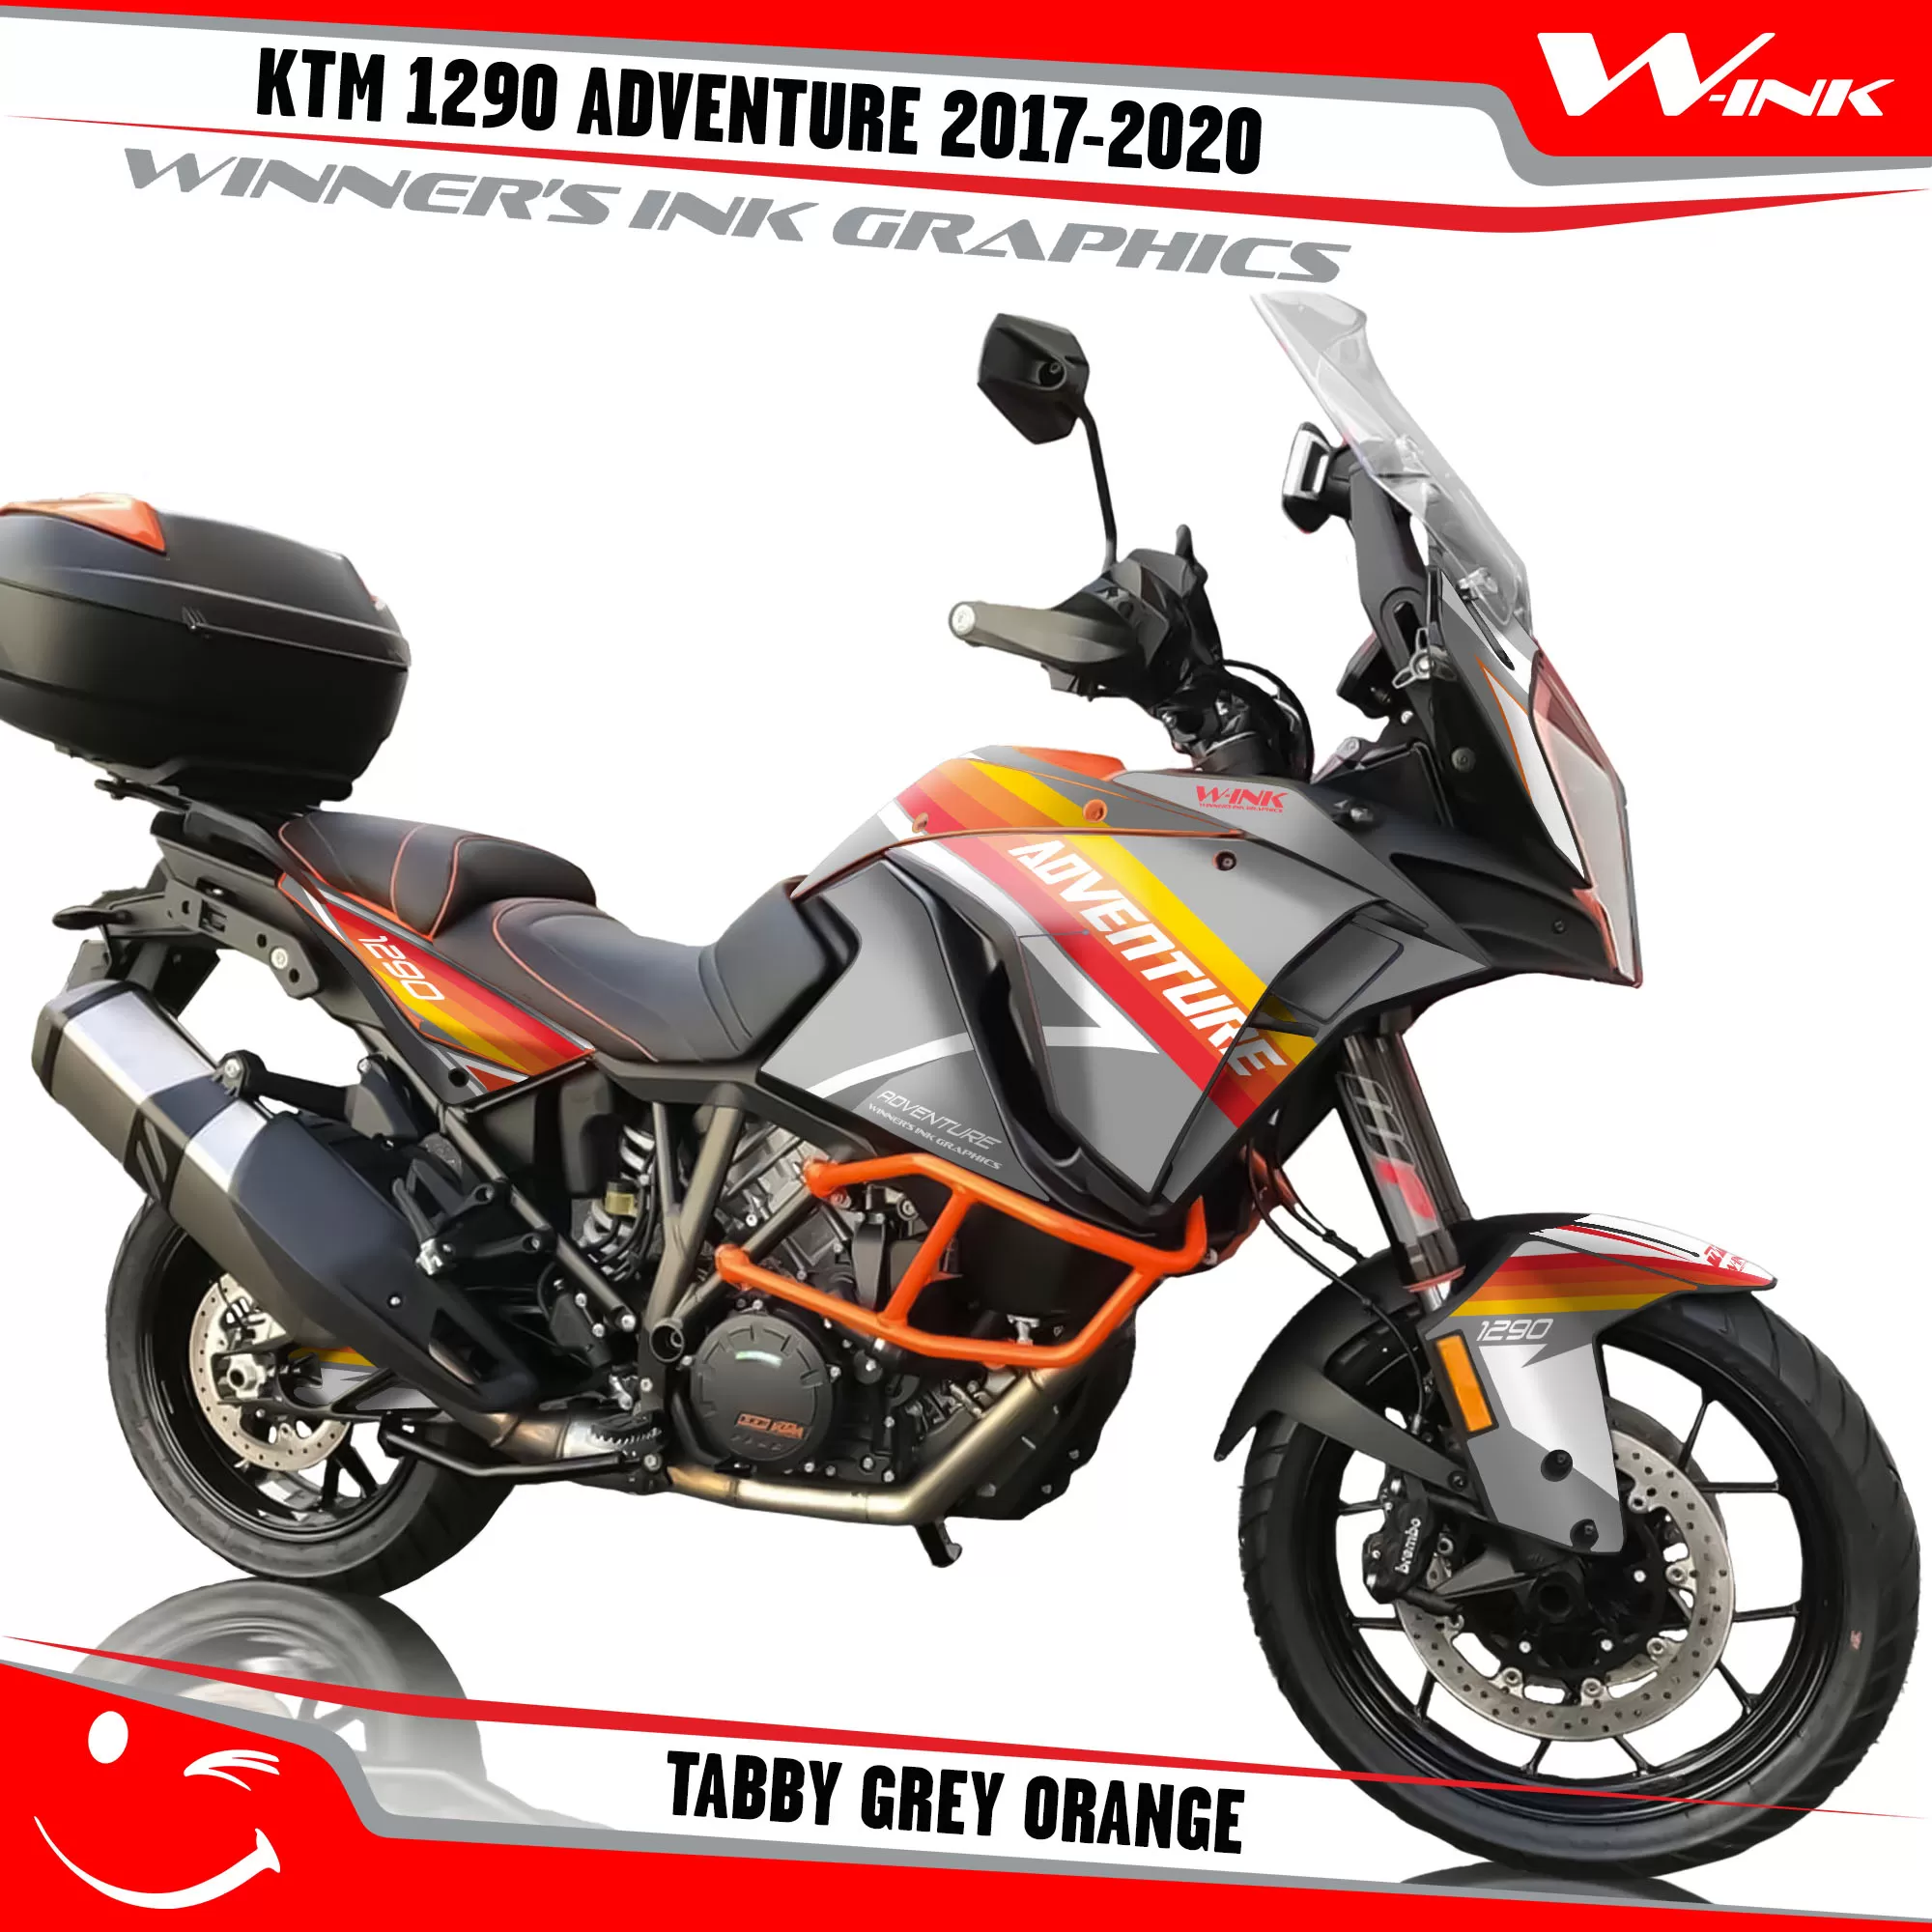 KTM-Adventure-1290-2017-2018-2019-2020-graphics-kit-and-decals-Tabby-Grey-Orange